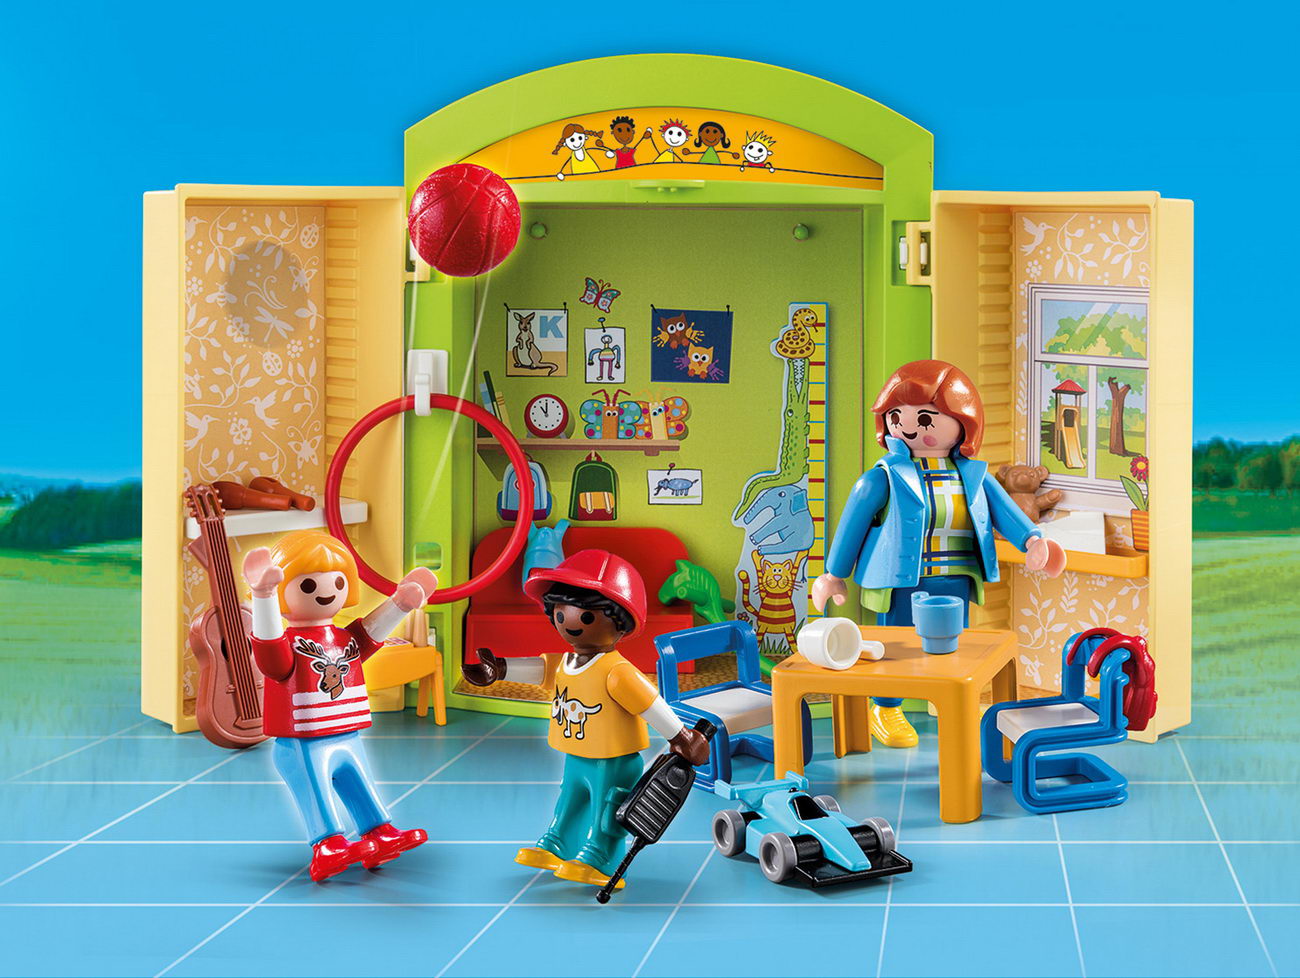 Playmobil 70308 - Spielbox Im Kindergarten - City Life